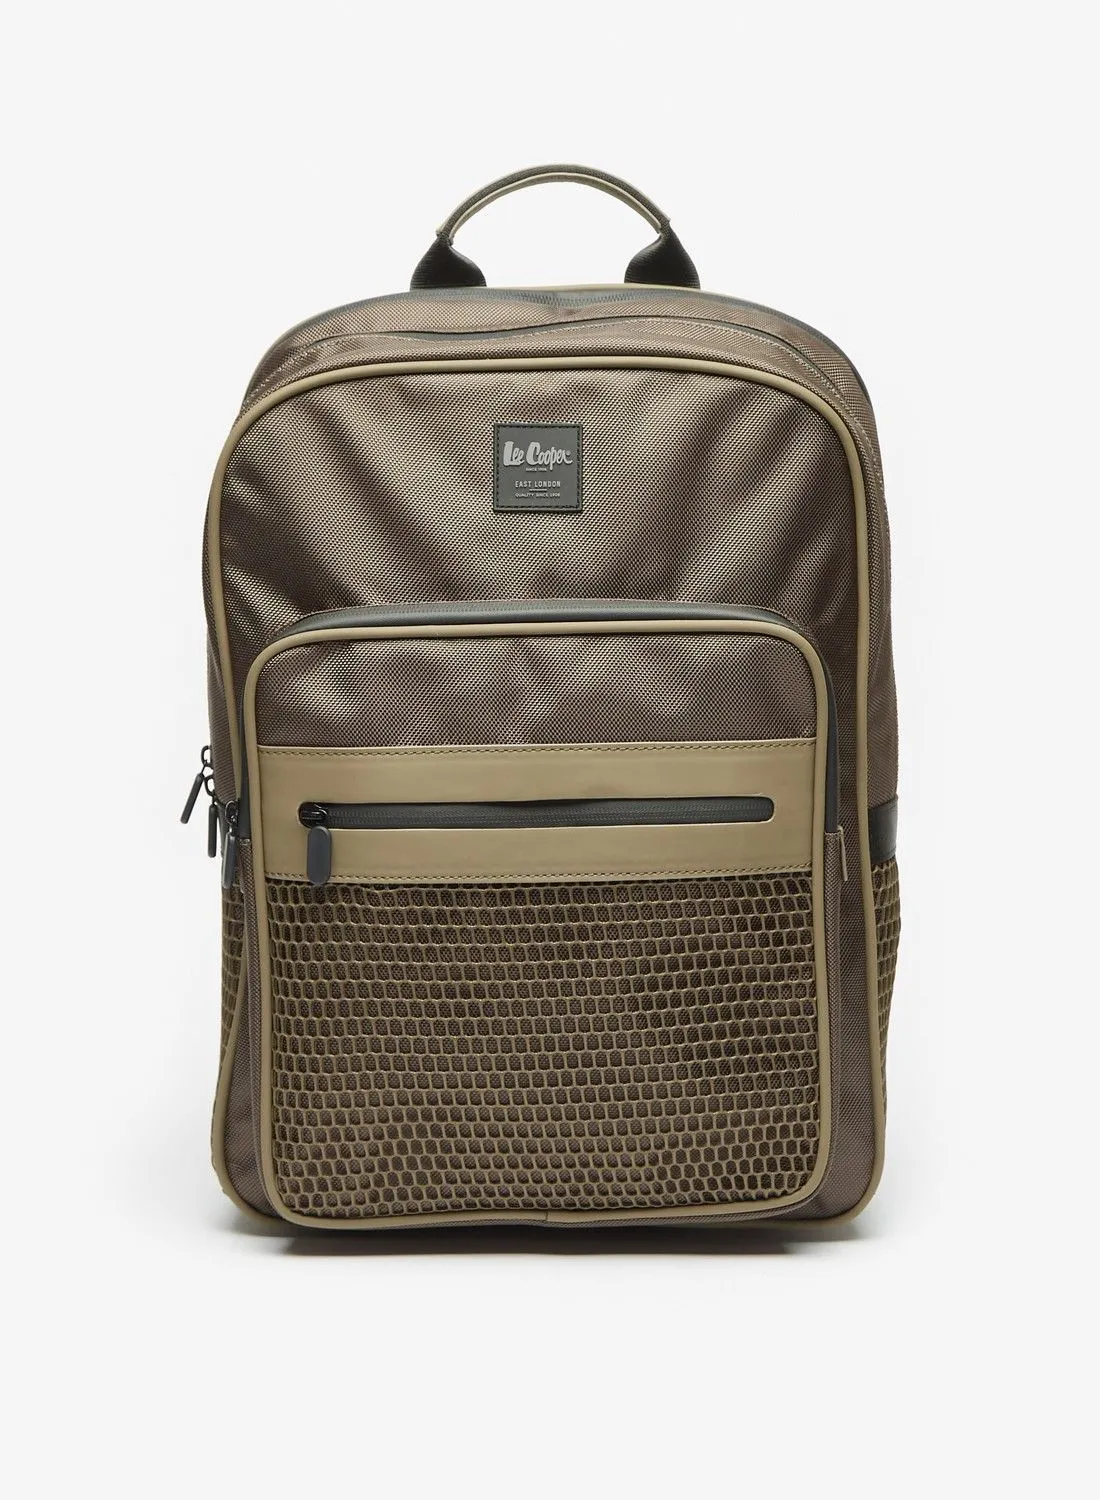 Lee Cooper Textured Backpack with Zip Closure